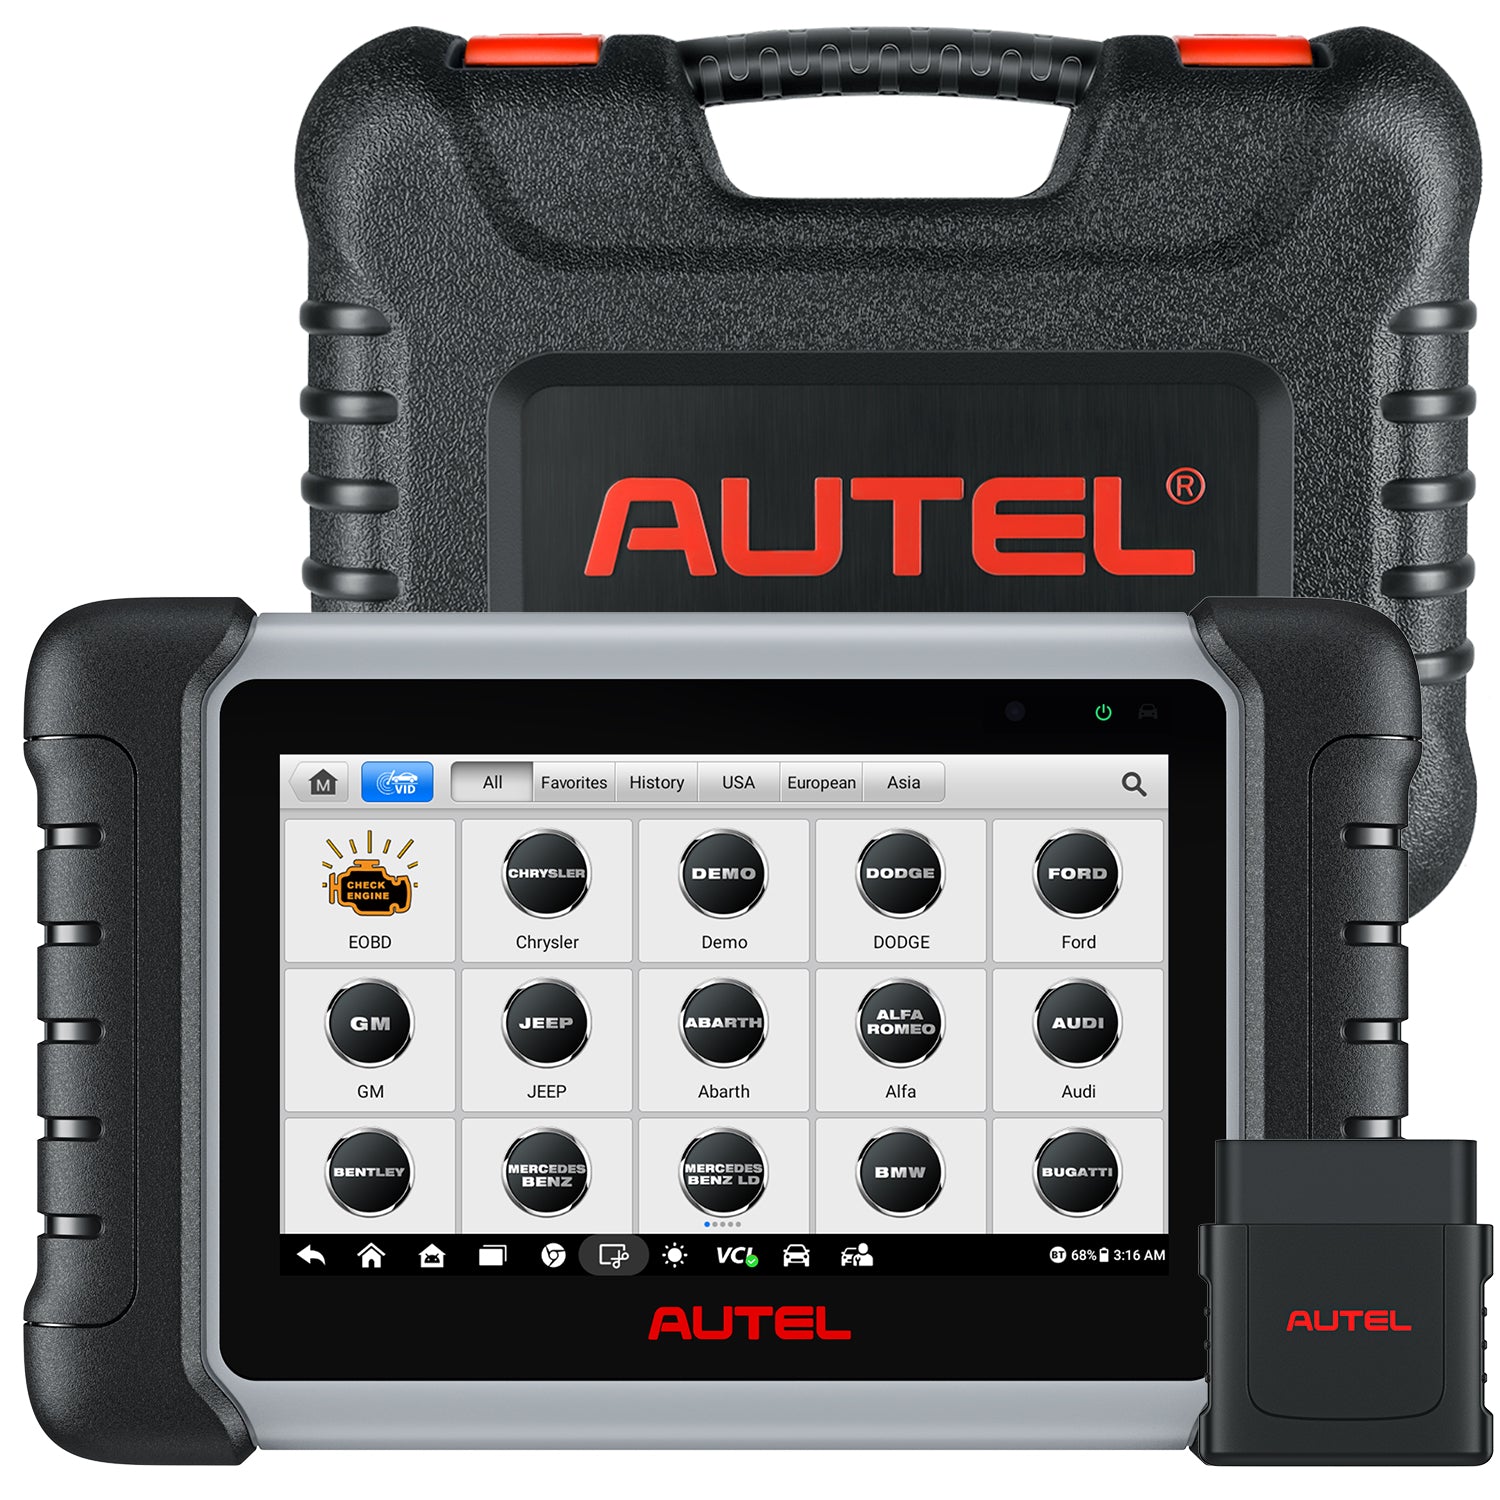 Autel MaxiCOM MK808S-BT PRO Car Diagnostic Tool,Auto OBD2 Scanner Code  Reader,Bi-directional Tool with BT506 